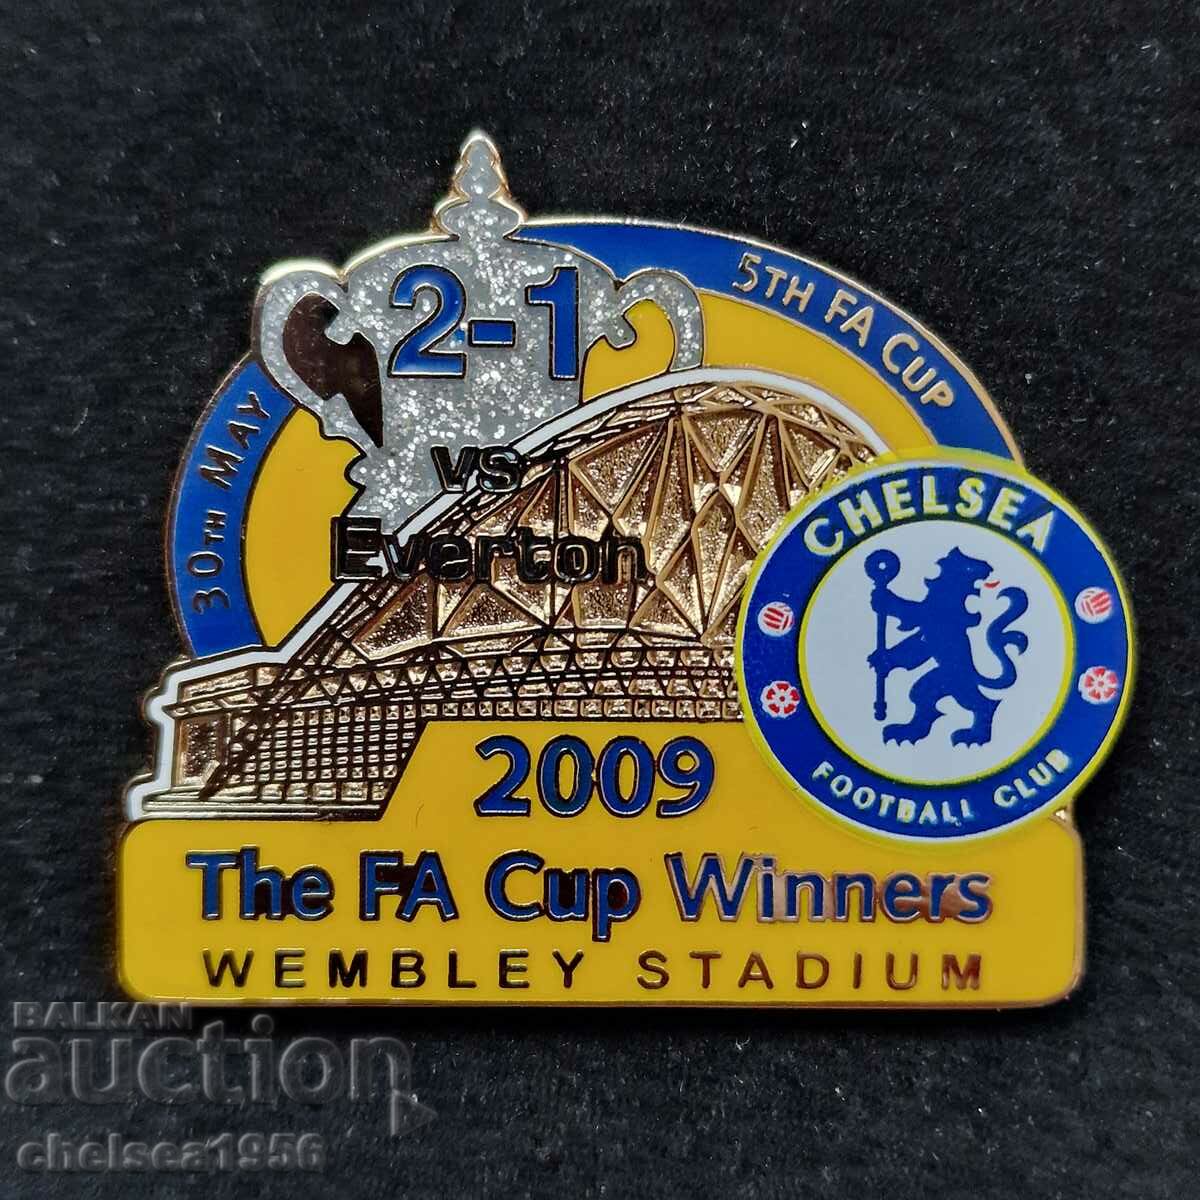 Chelsea 2009 FA Cup Winners Badge